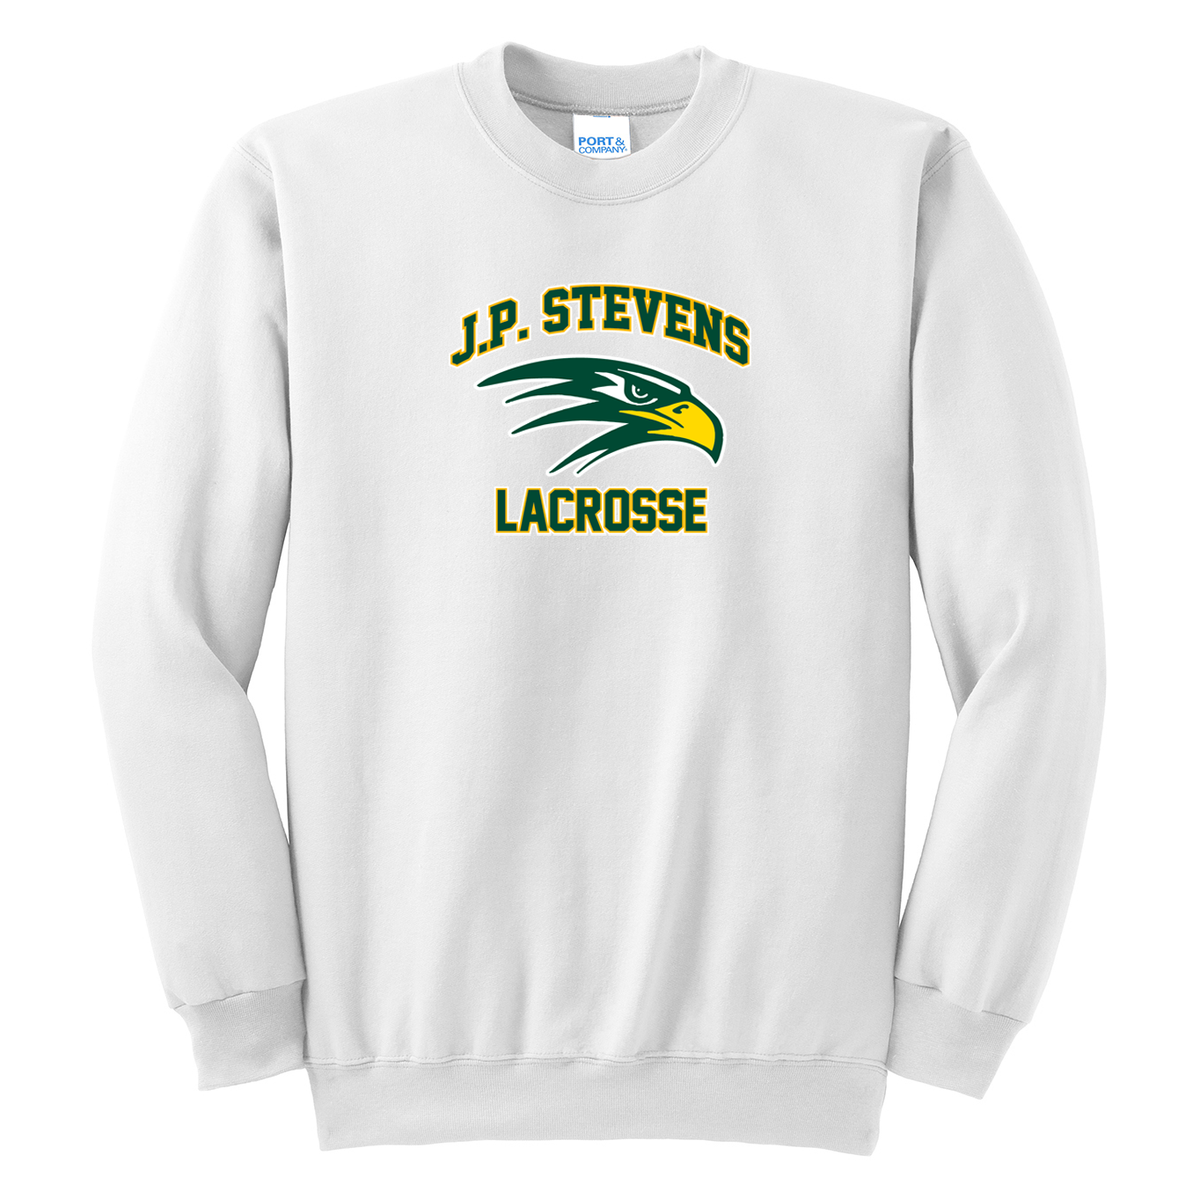 J.P. Stevens Lacrosse Crew Neck Sweater